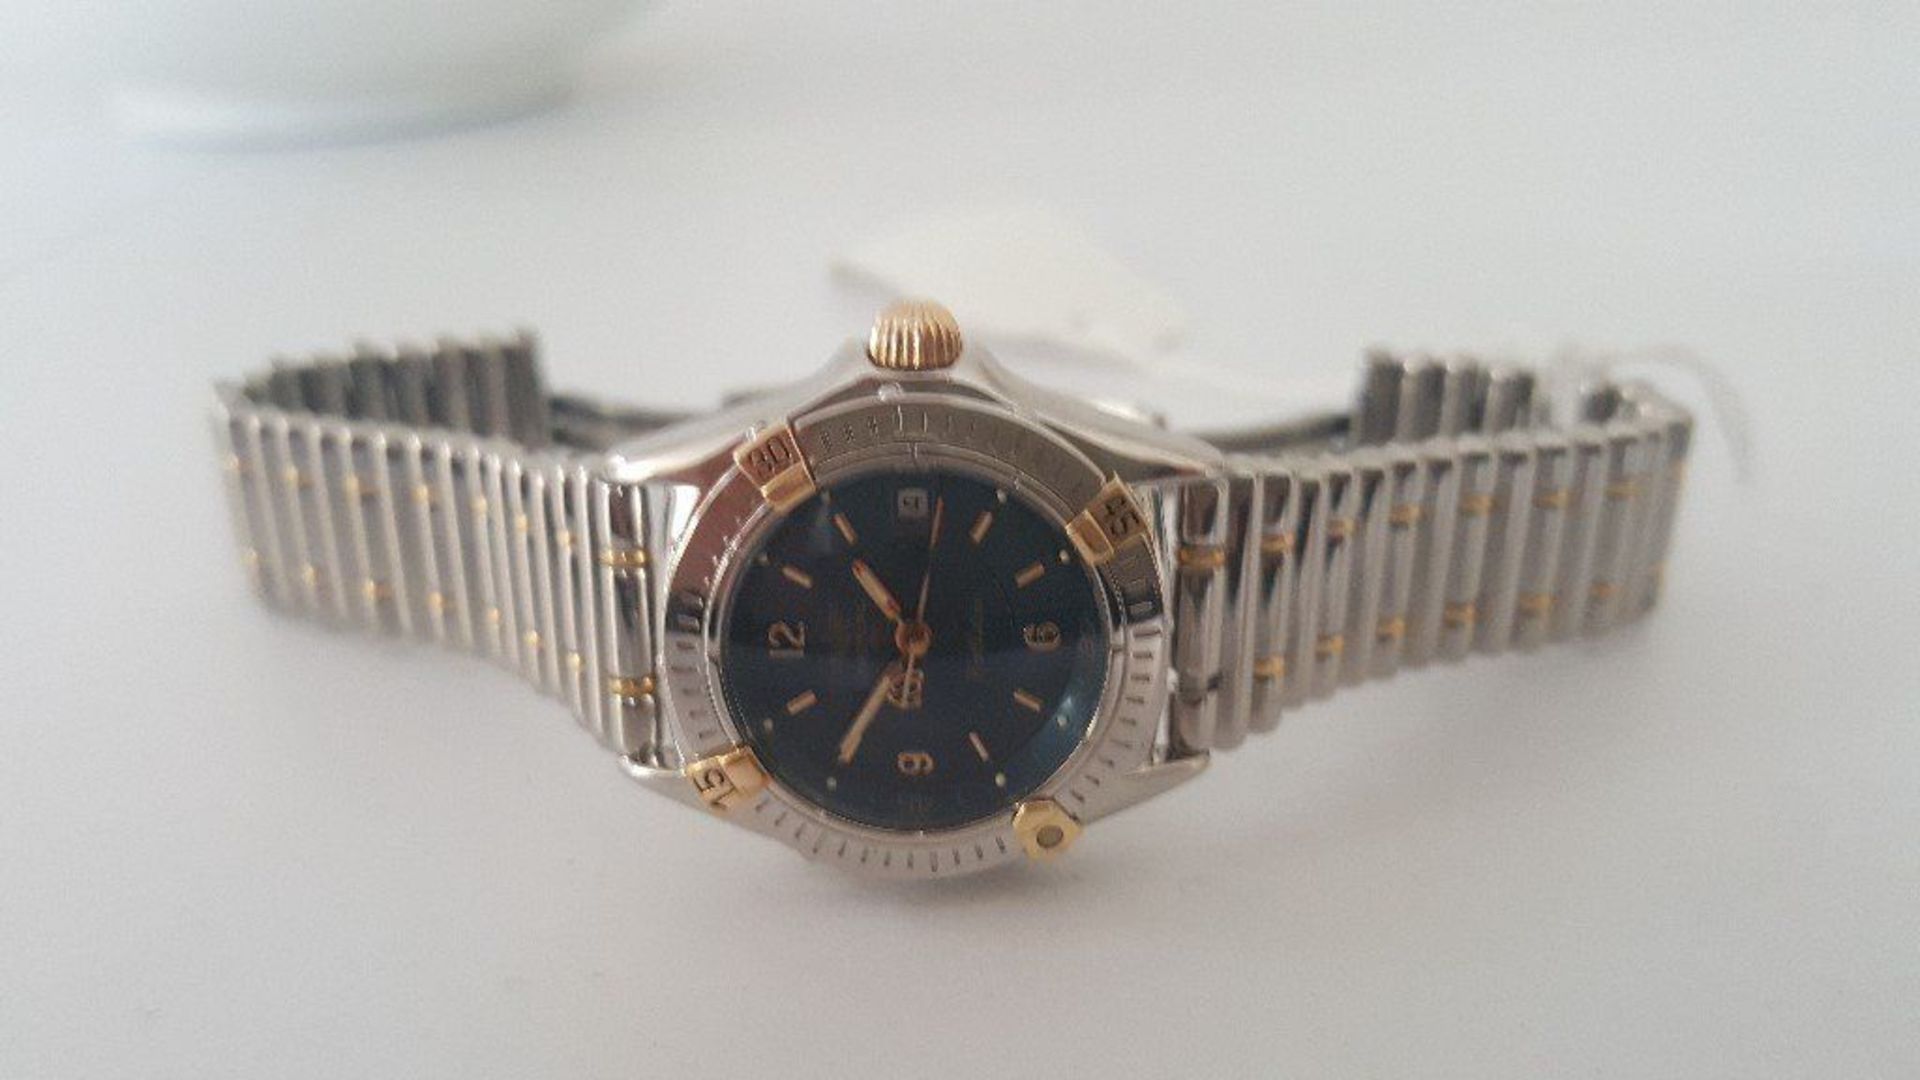 Breitling Callistino Ladies Quartz Blue Dial Watch 18CT Gold Trimmings Model No: B52045 - Image 5 of 6